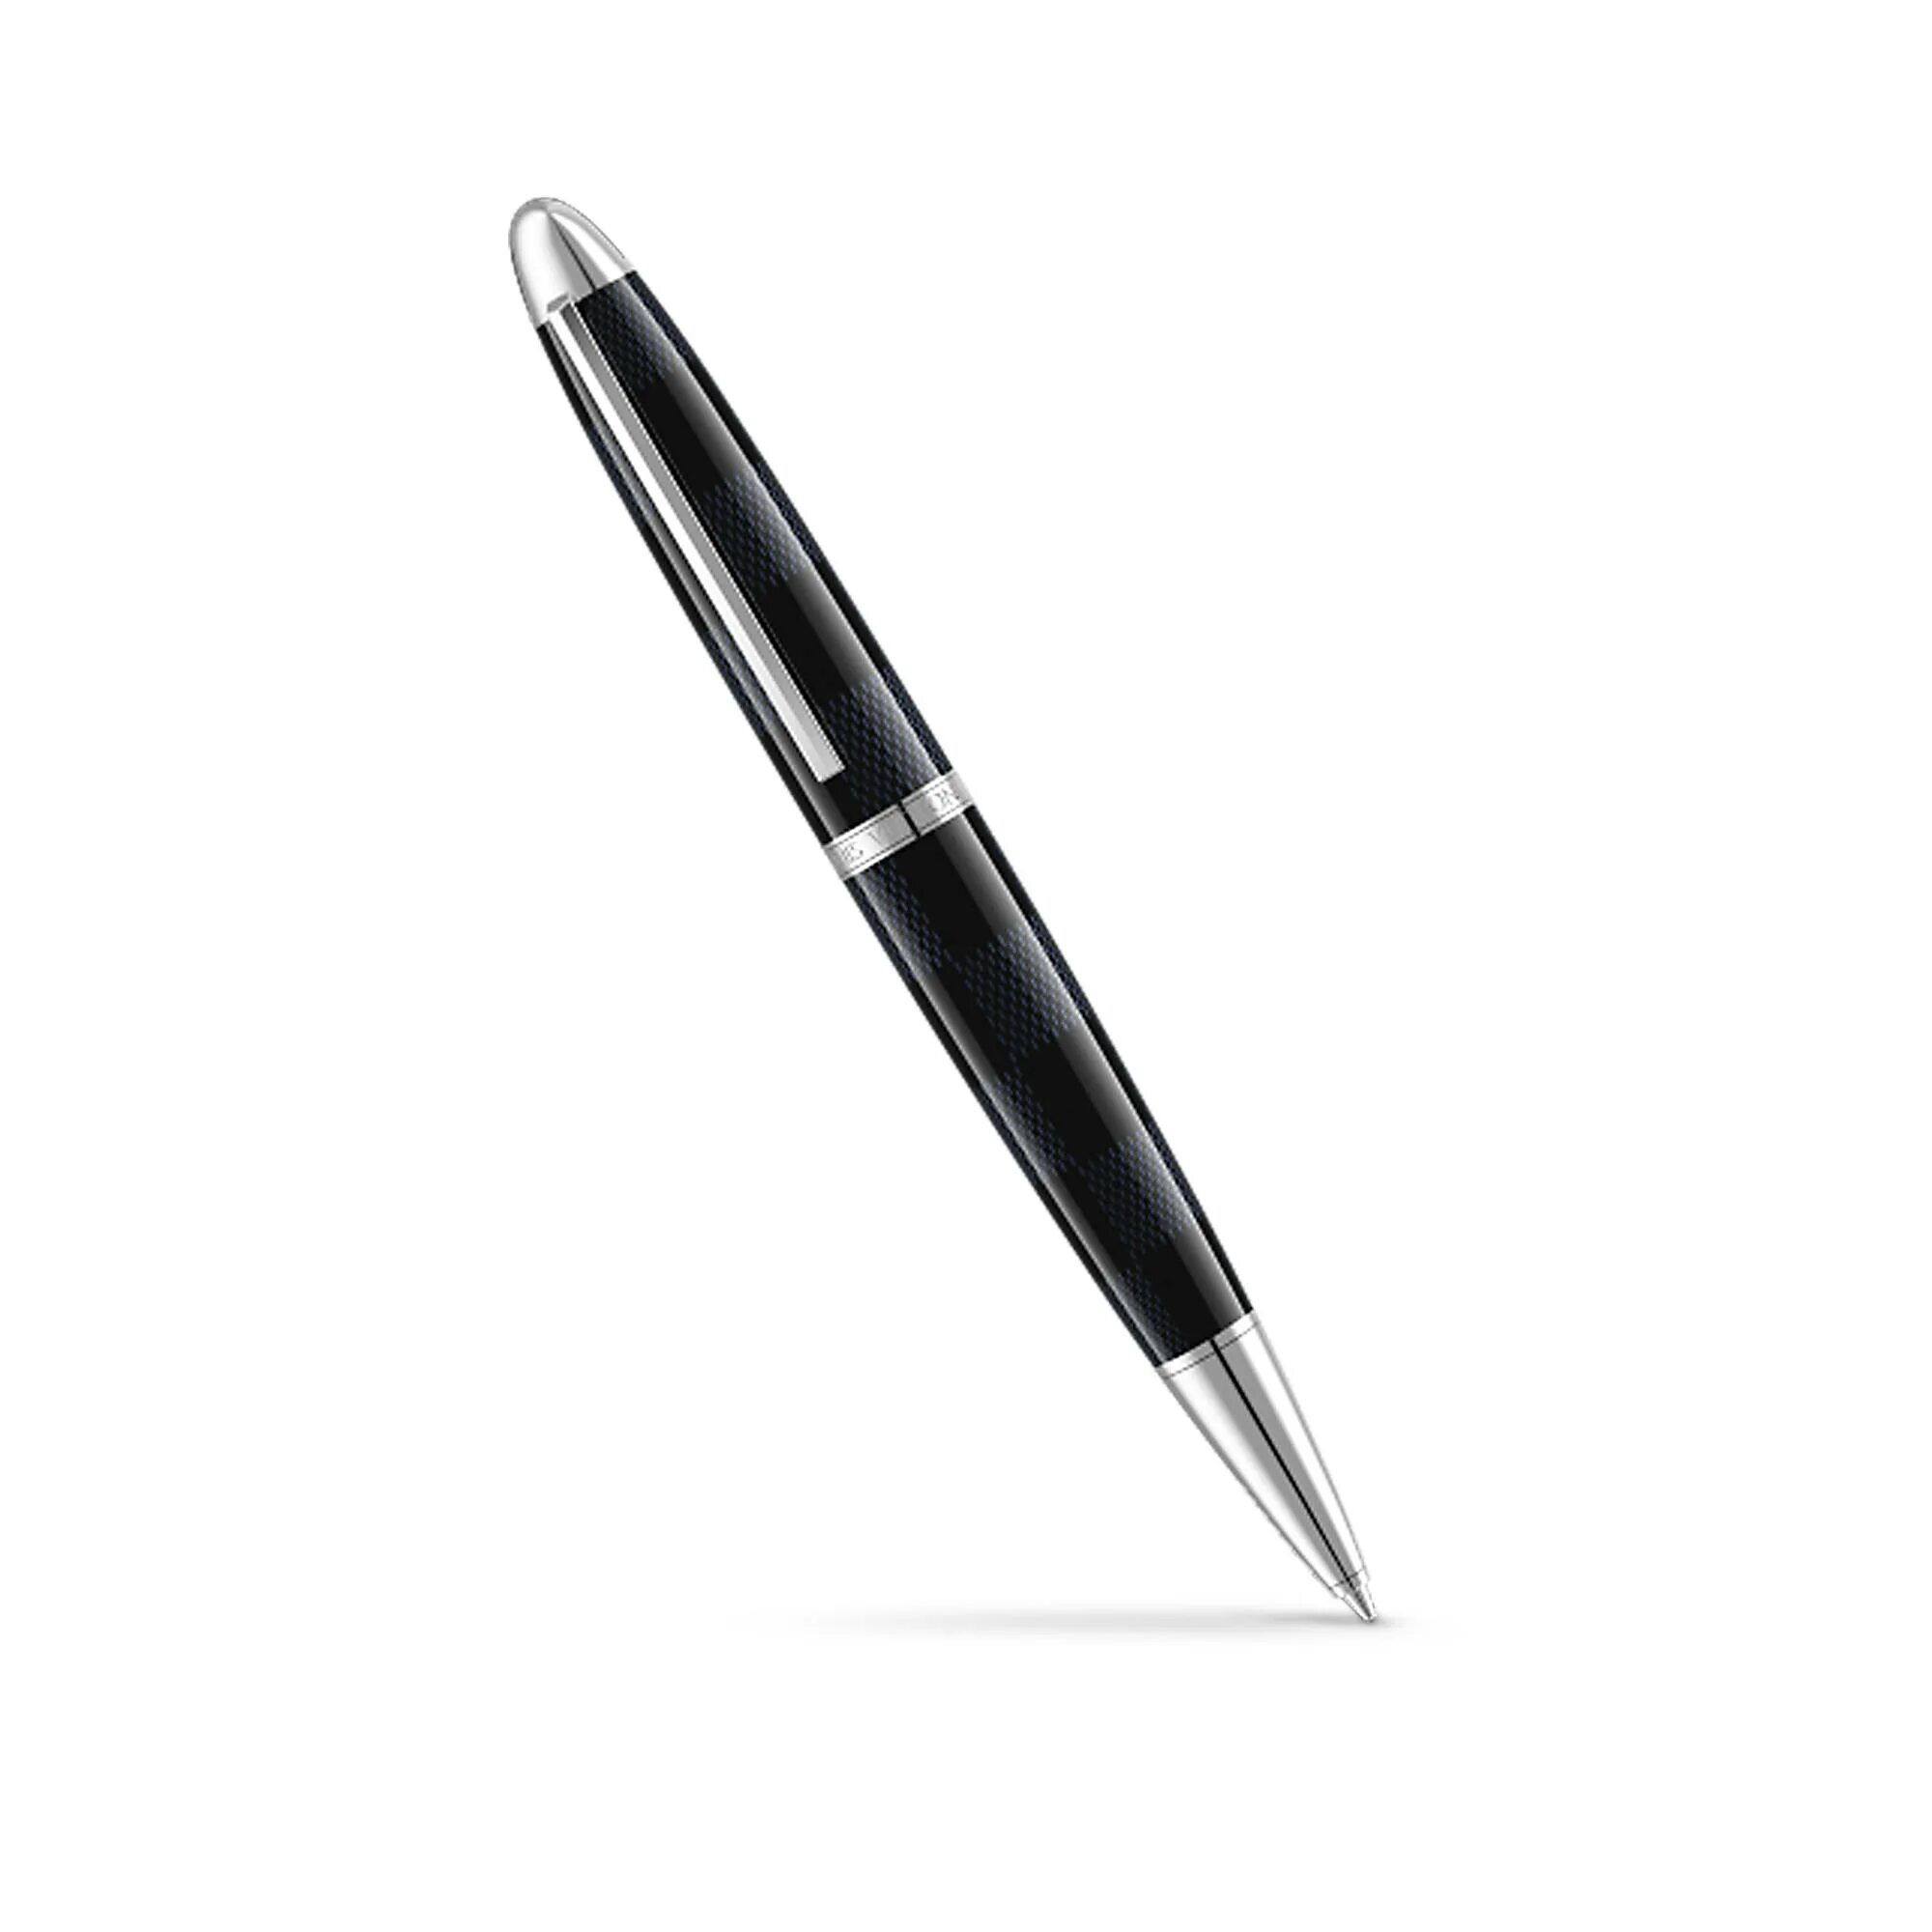 Pen Louis Vuitton. Pic ручки. Ручка Cargo. Ручка Луи Виттон шариковая. Writing collection